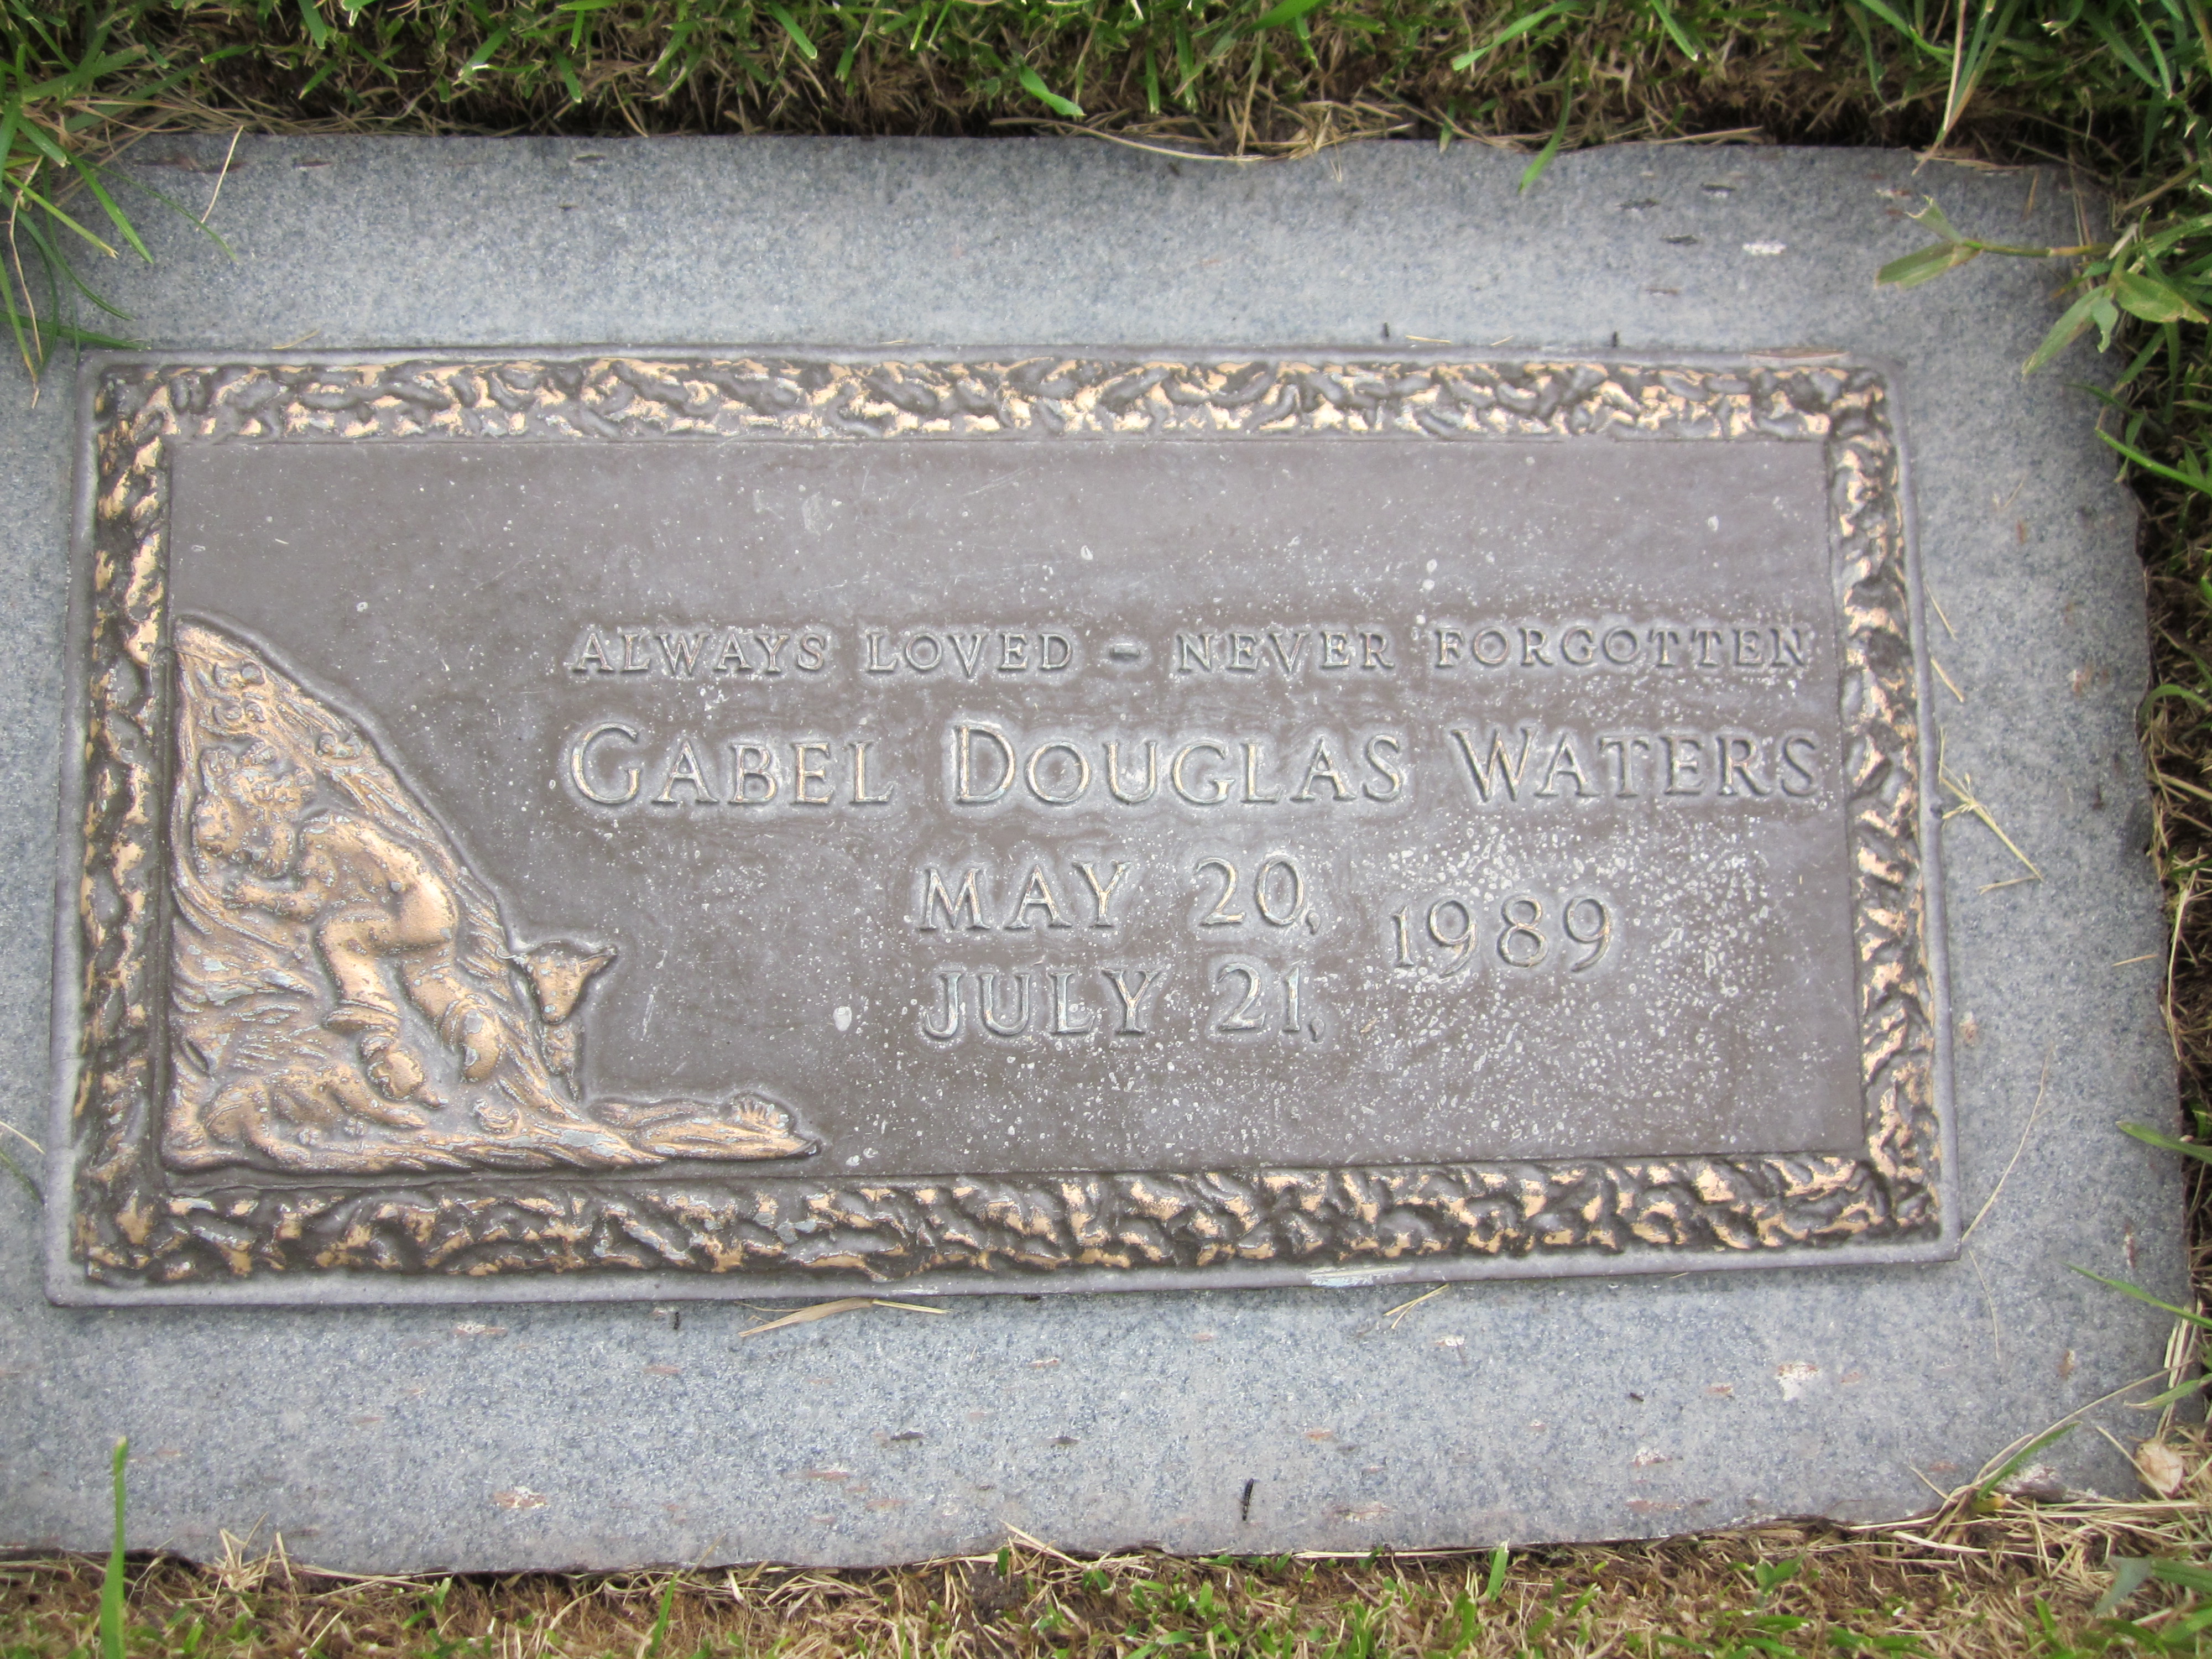 Gabel Douglas Waters